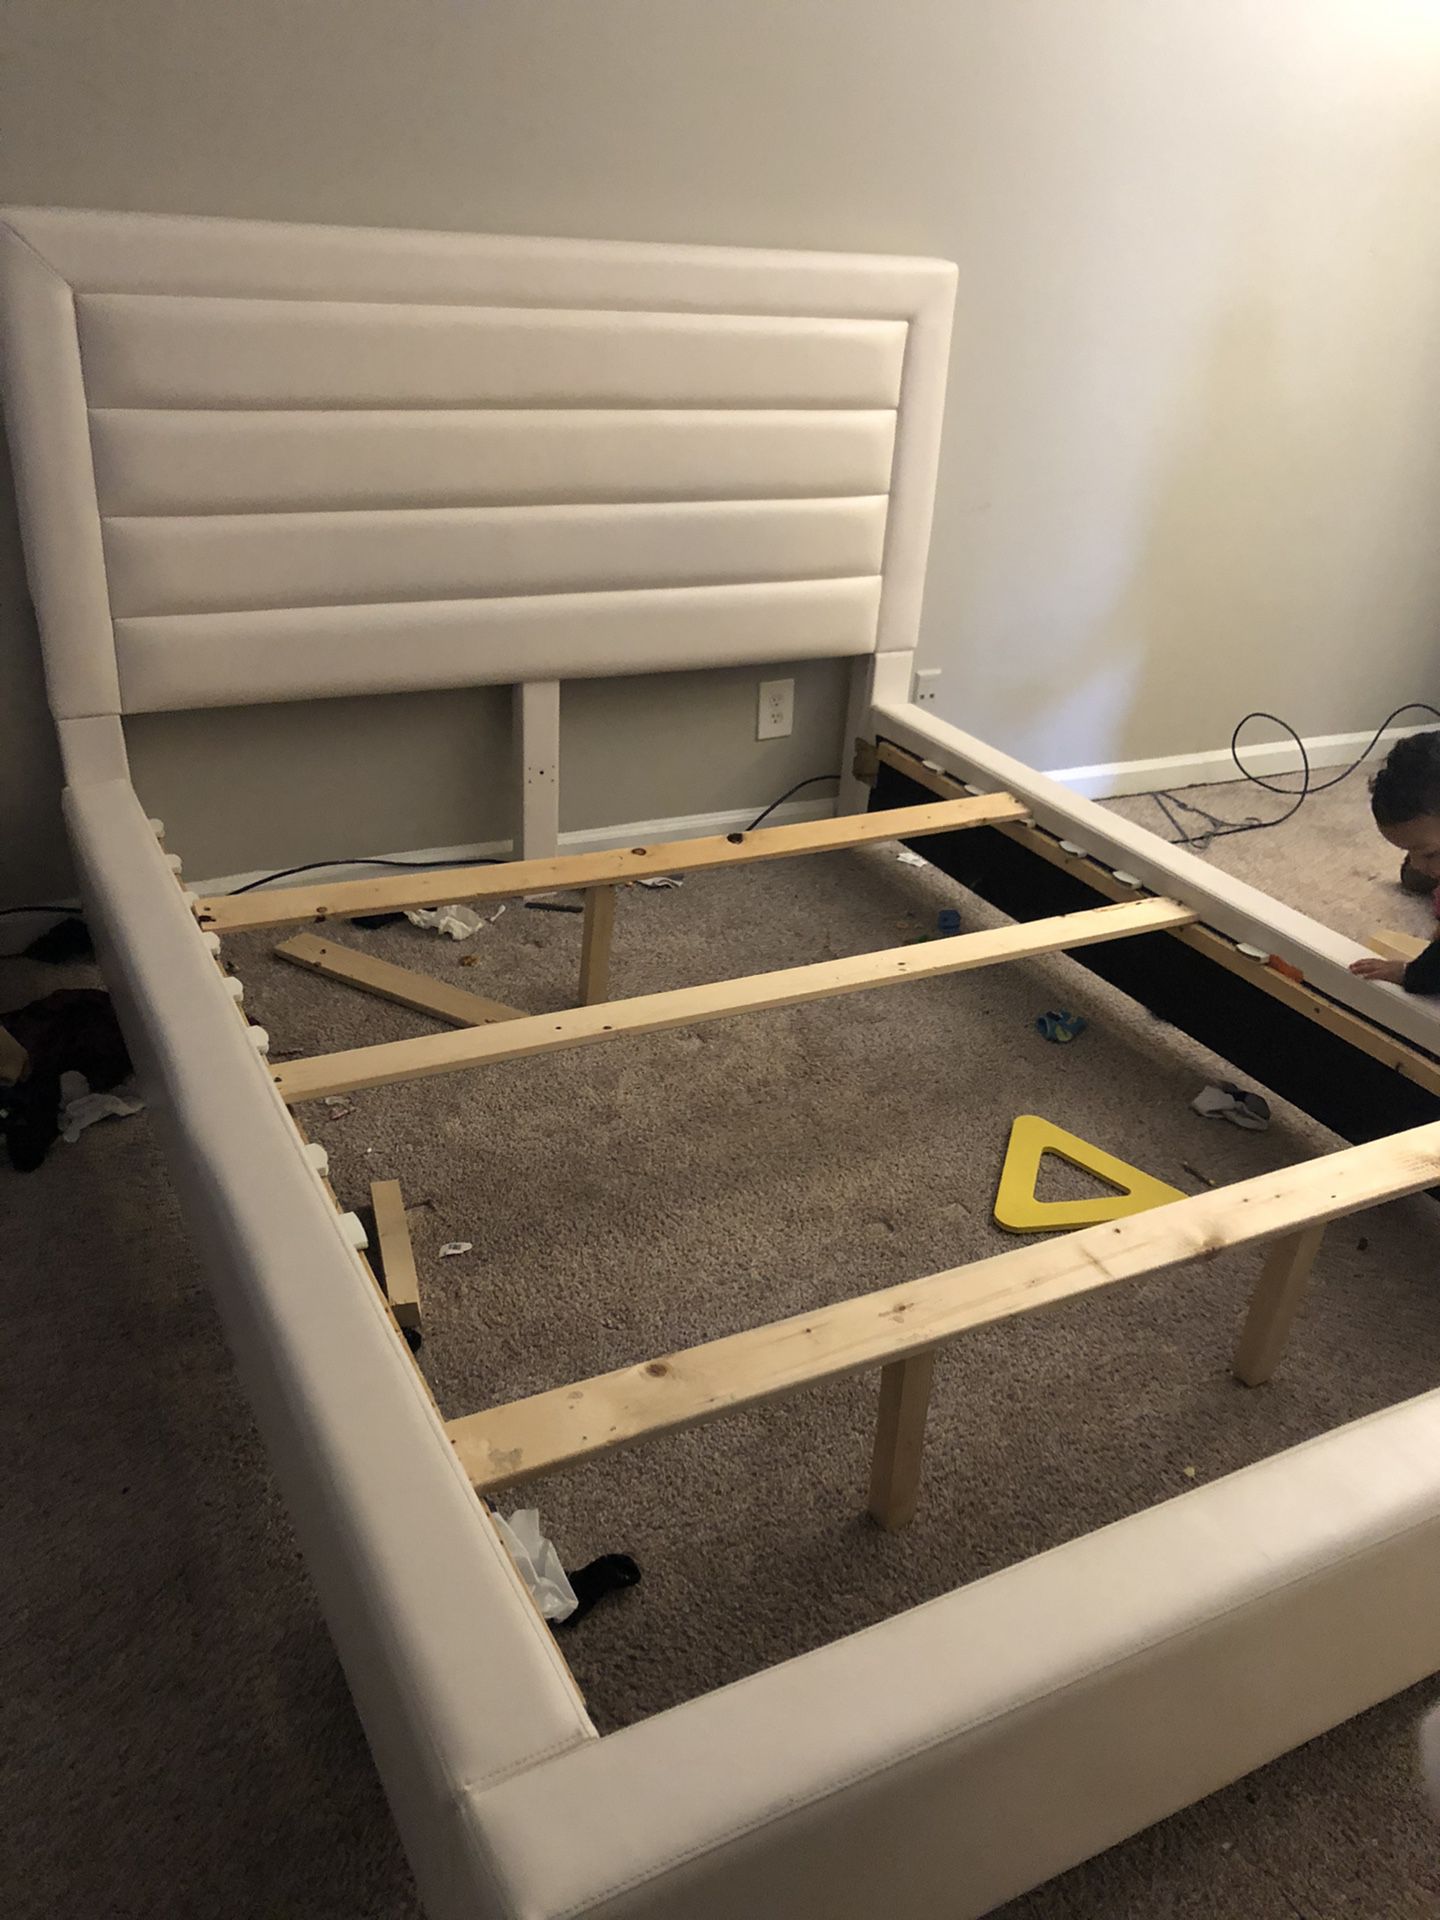 Queen platform bed frame $100 firm. Don’t offer less